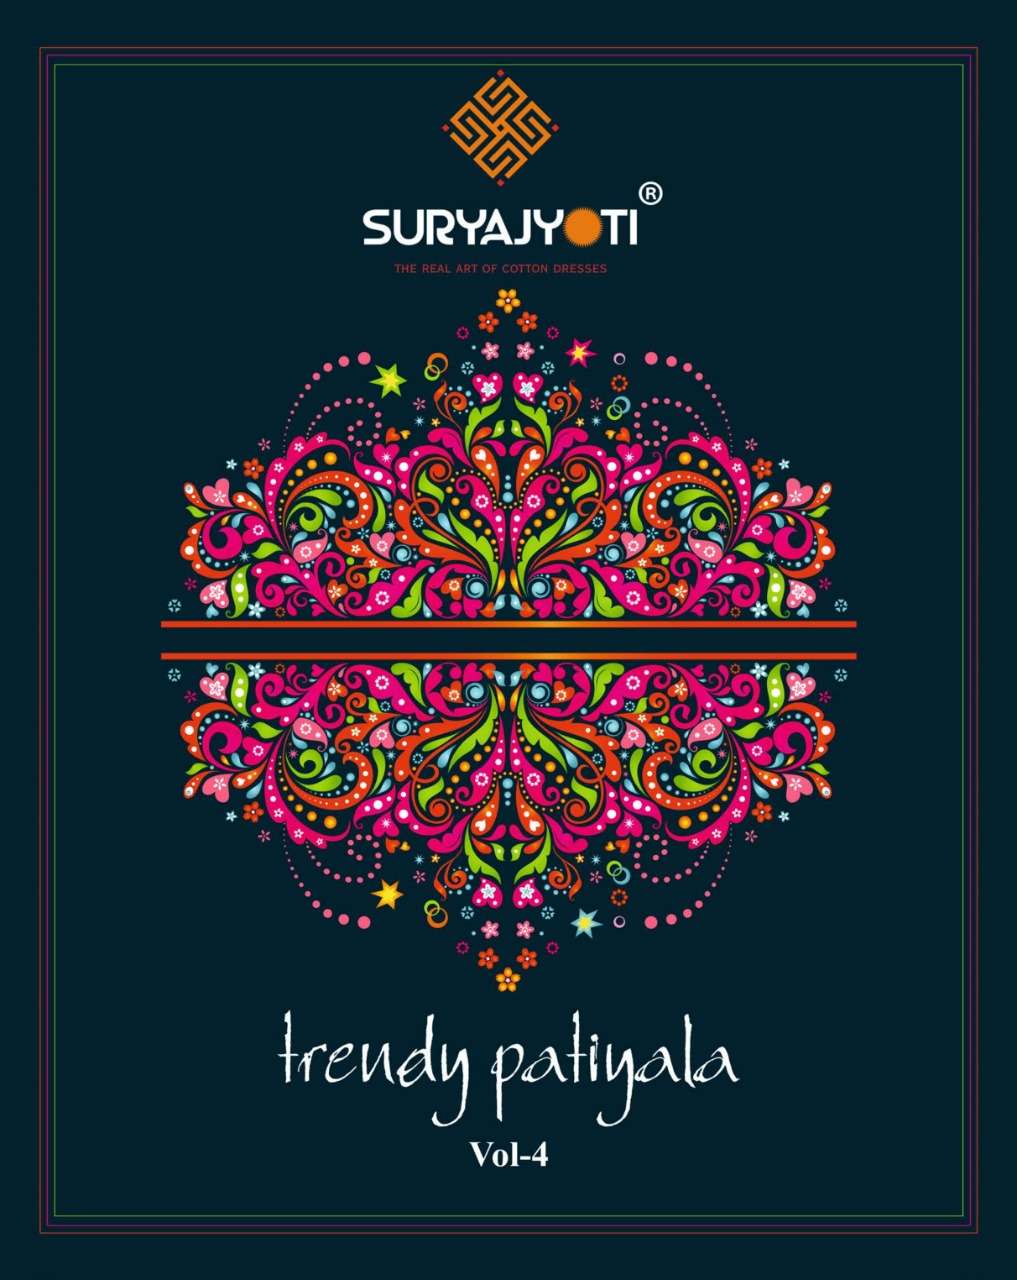 suryajyoti trendy patiyala vol 4 cotton unstitched dress best seller 